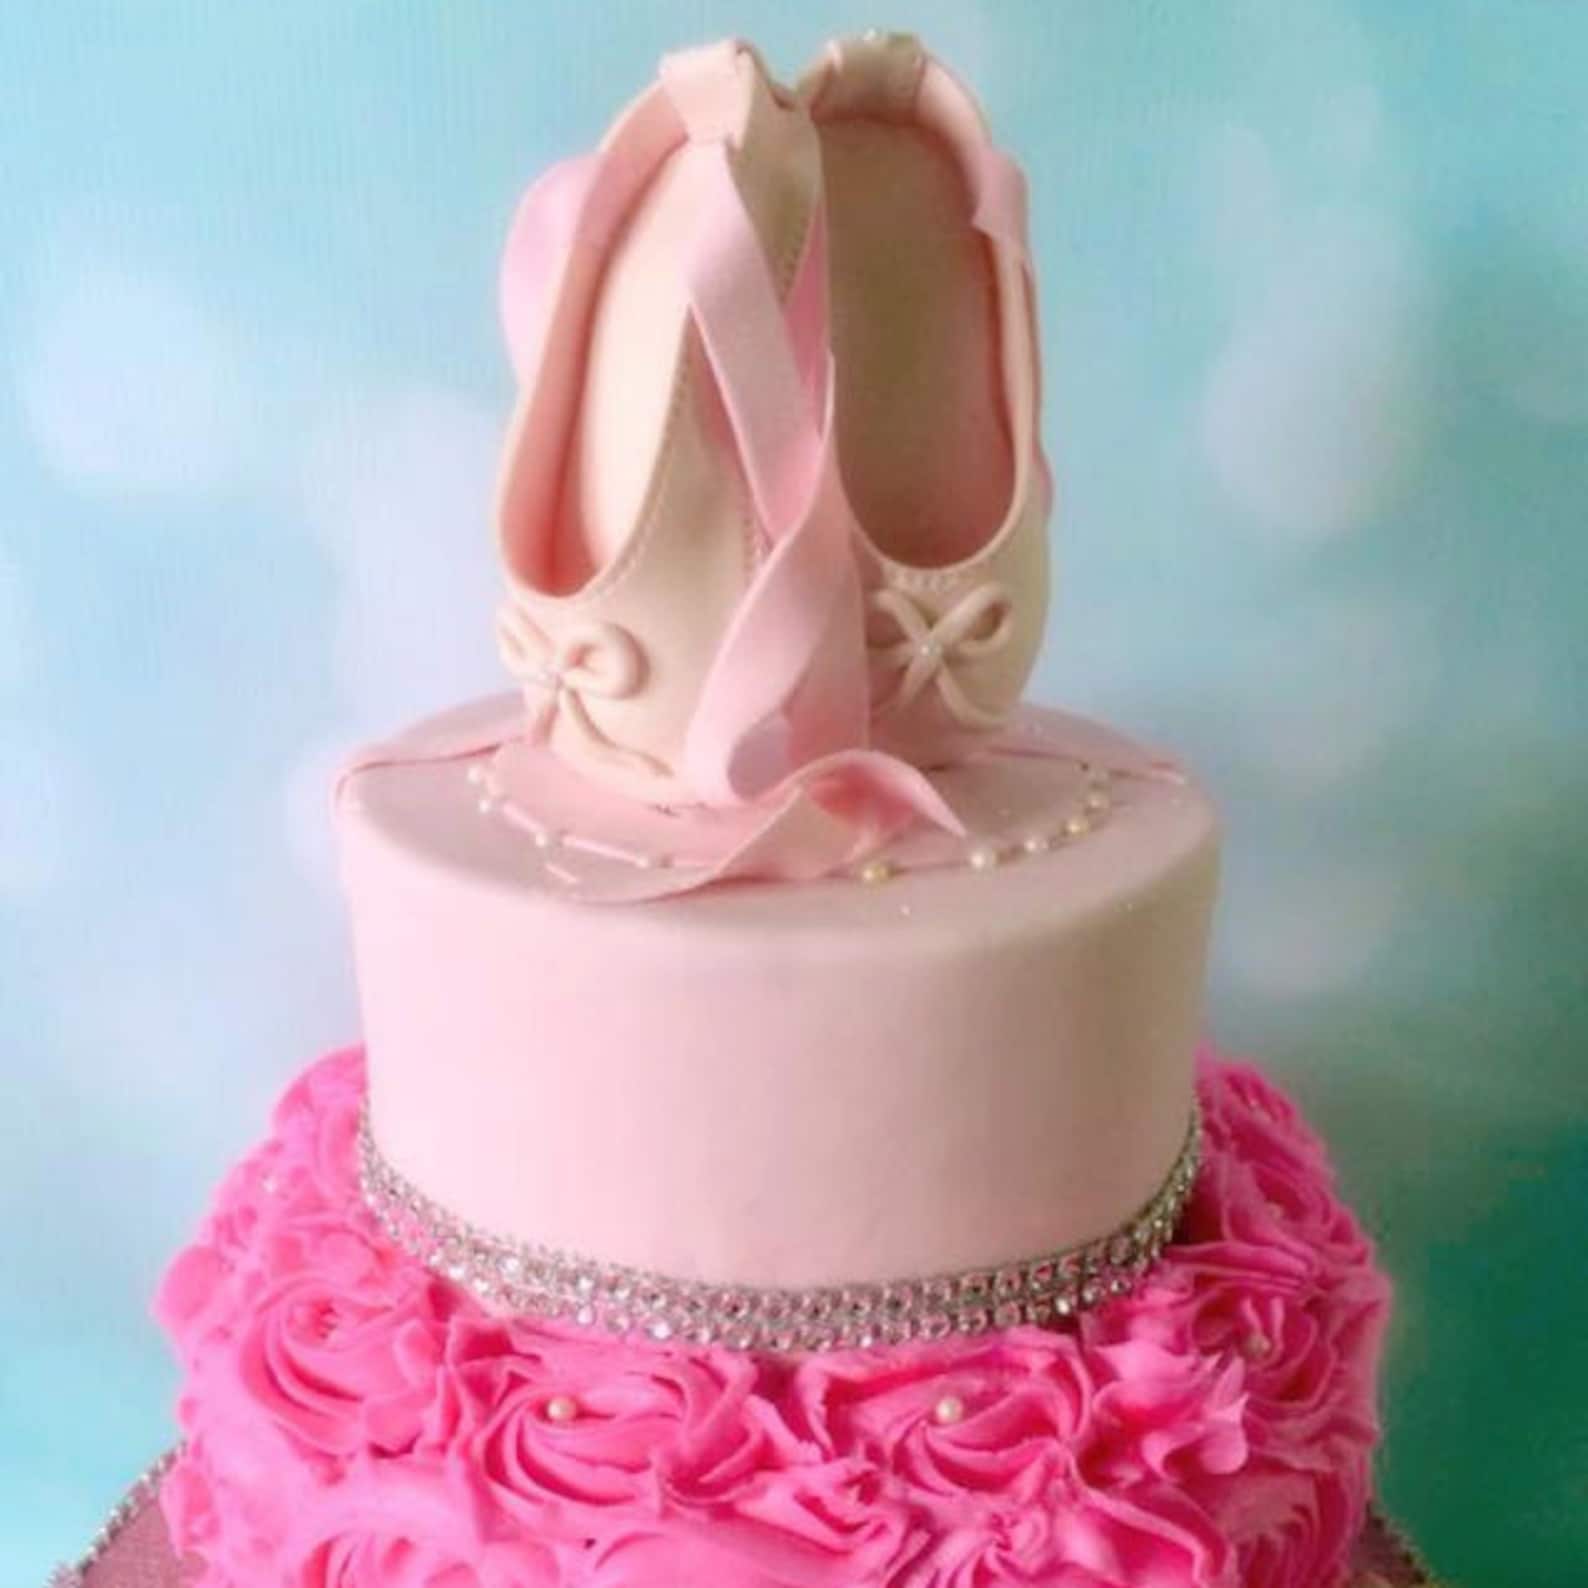 ballerina cake topper pink ballet shoes cake topper birthday cake topper ballerina cake decorations ballerina birthday decor bal